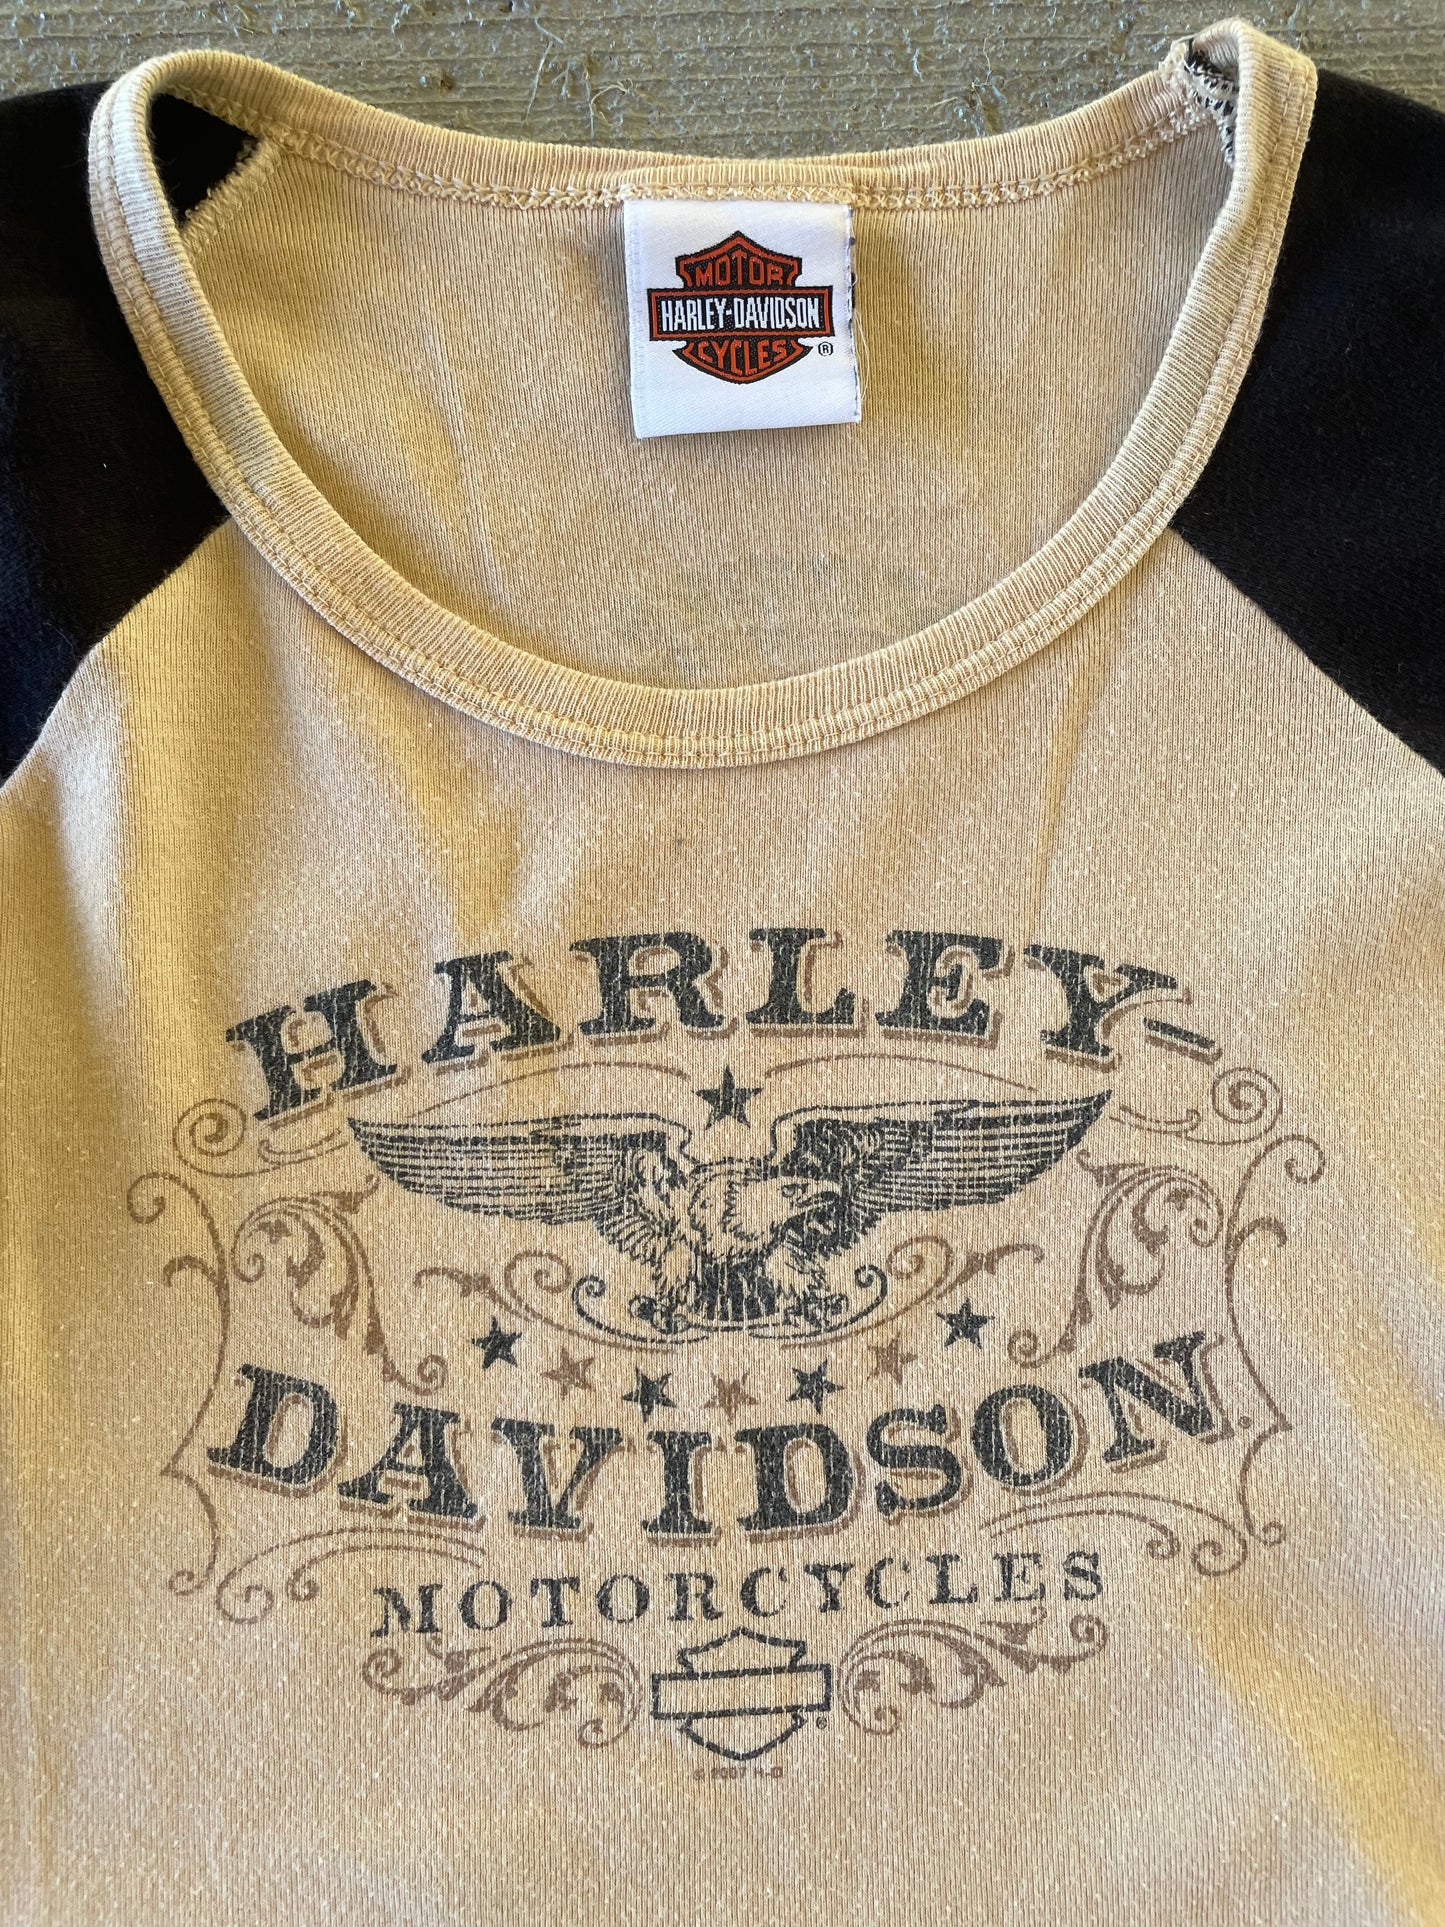 2007 Harley Davidson Tee (women’s)